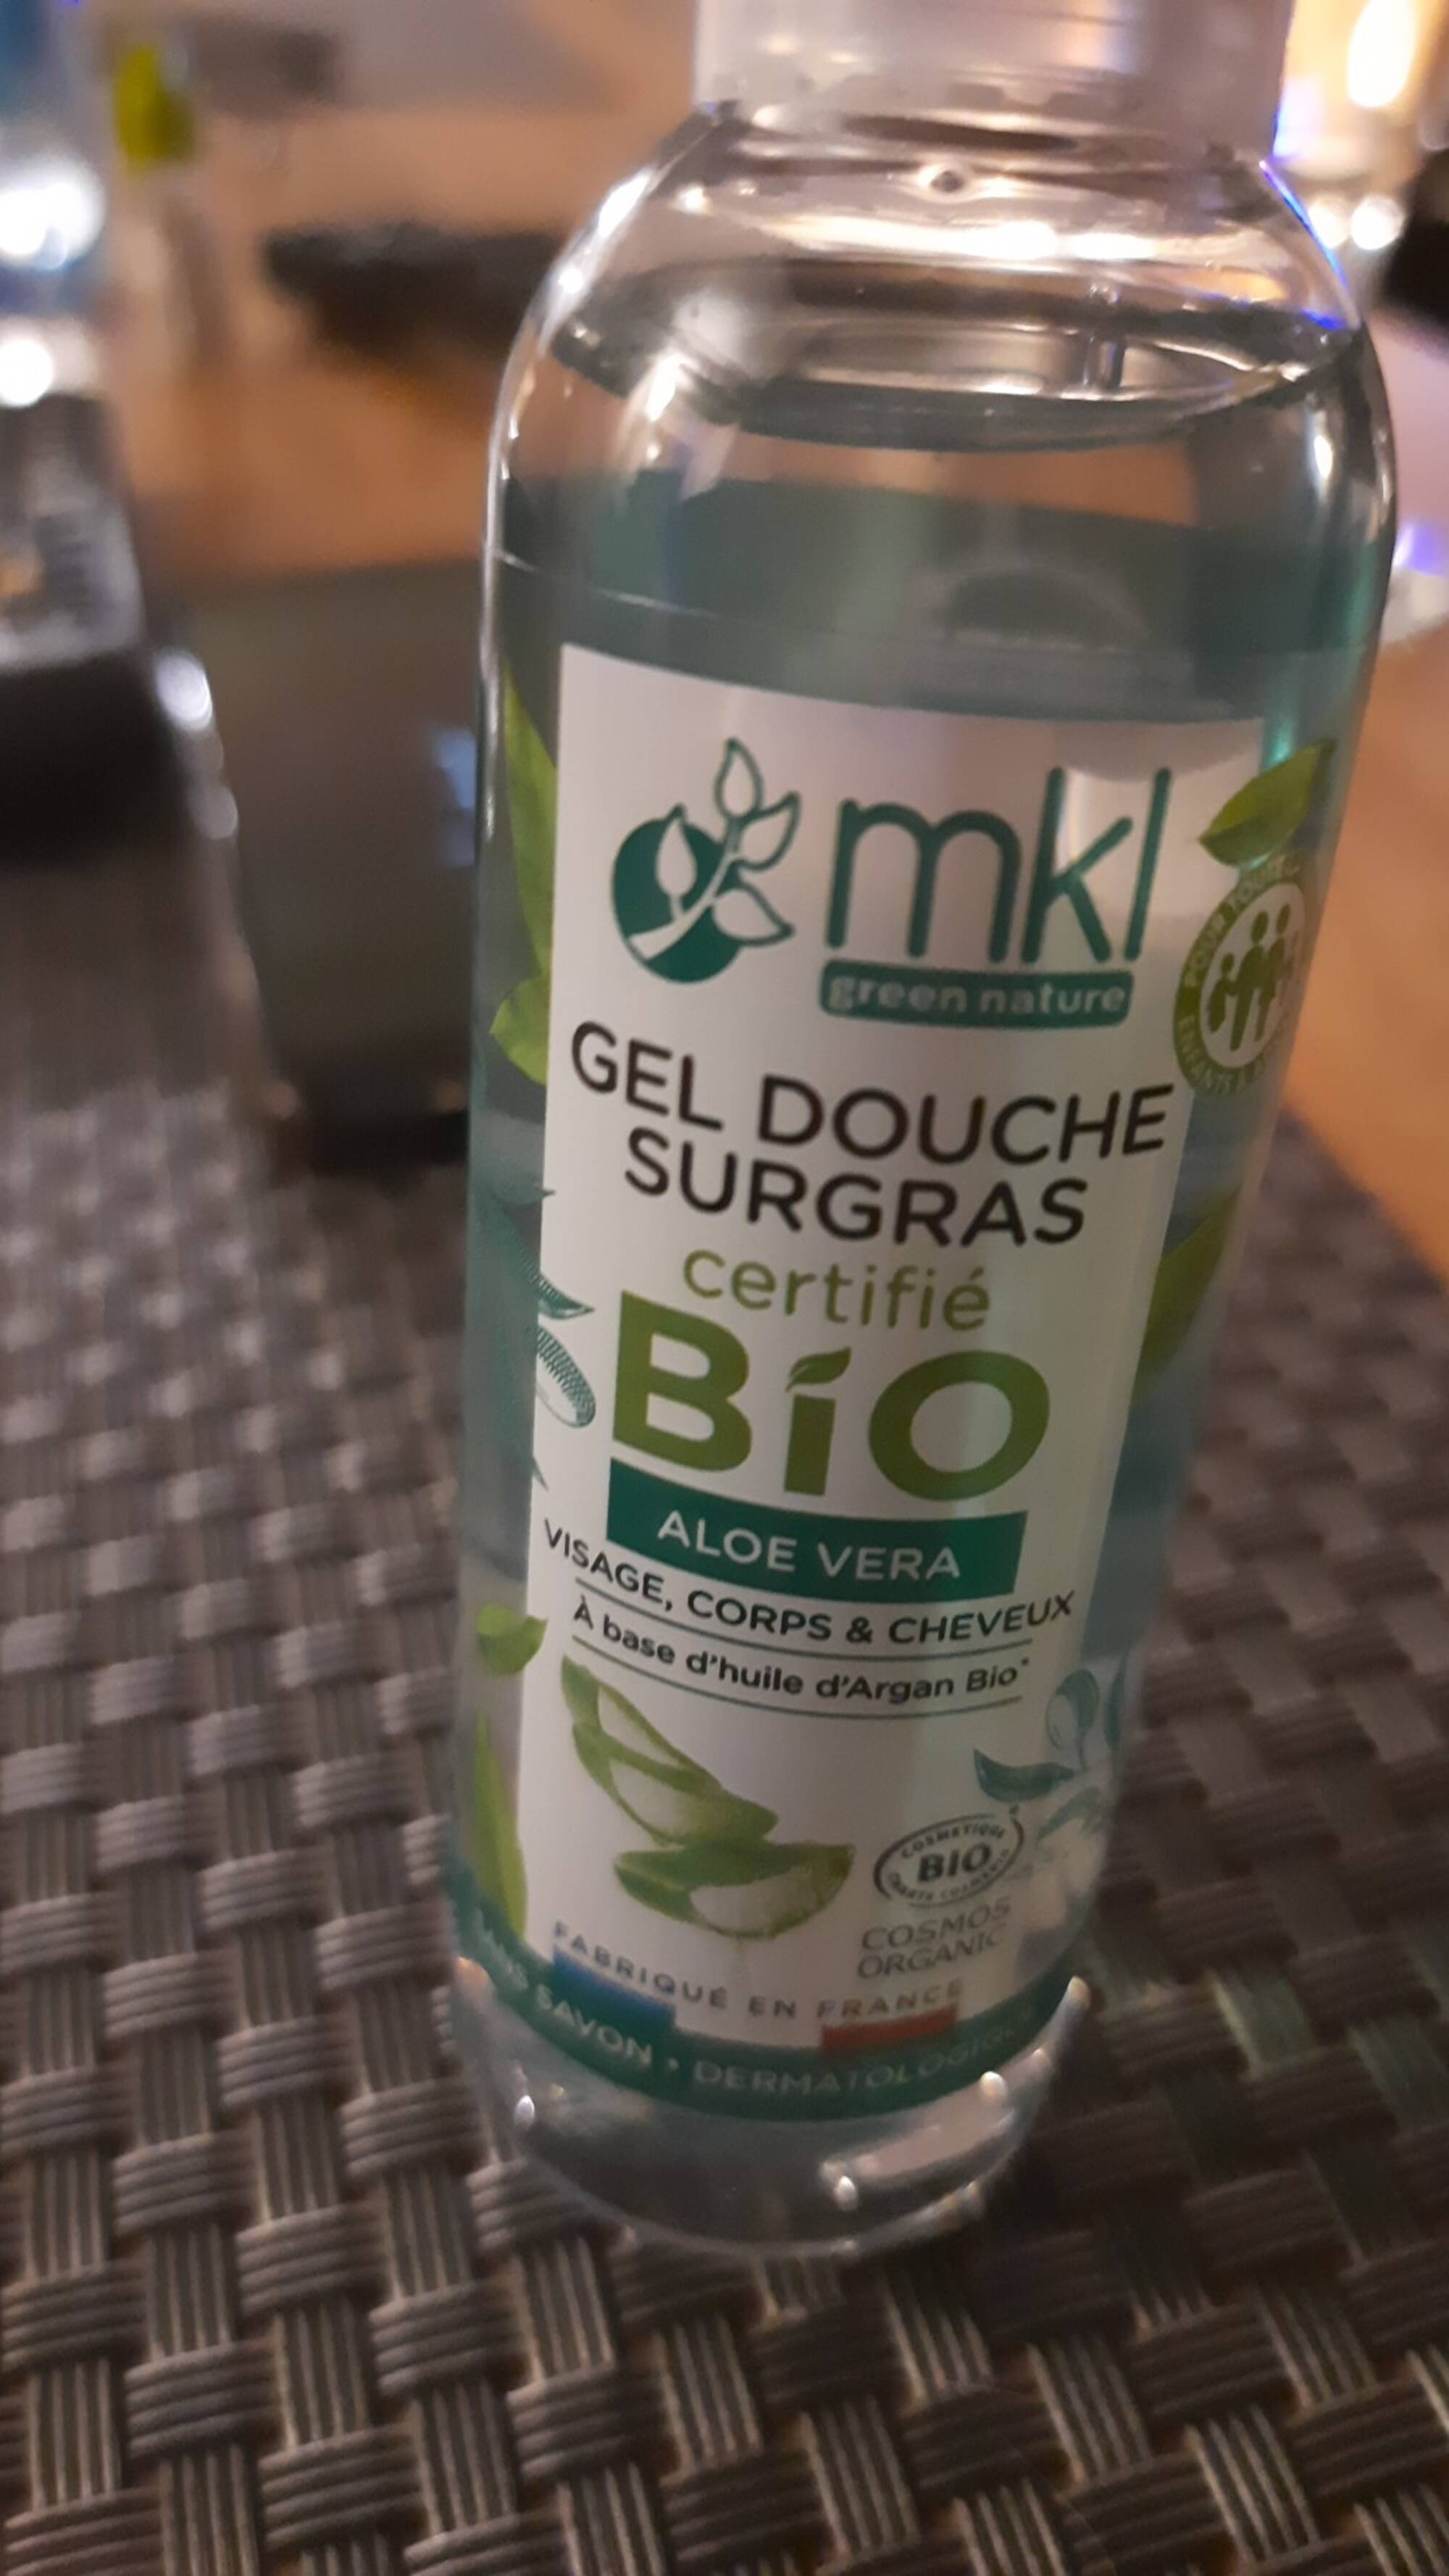 MKL - Aloe vera - Gel douche surgras certifié bio